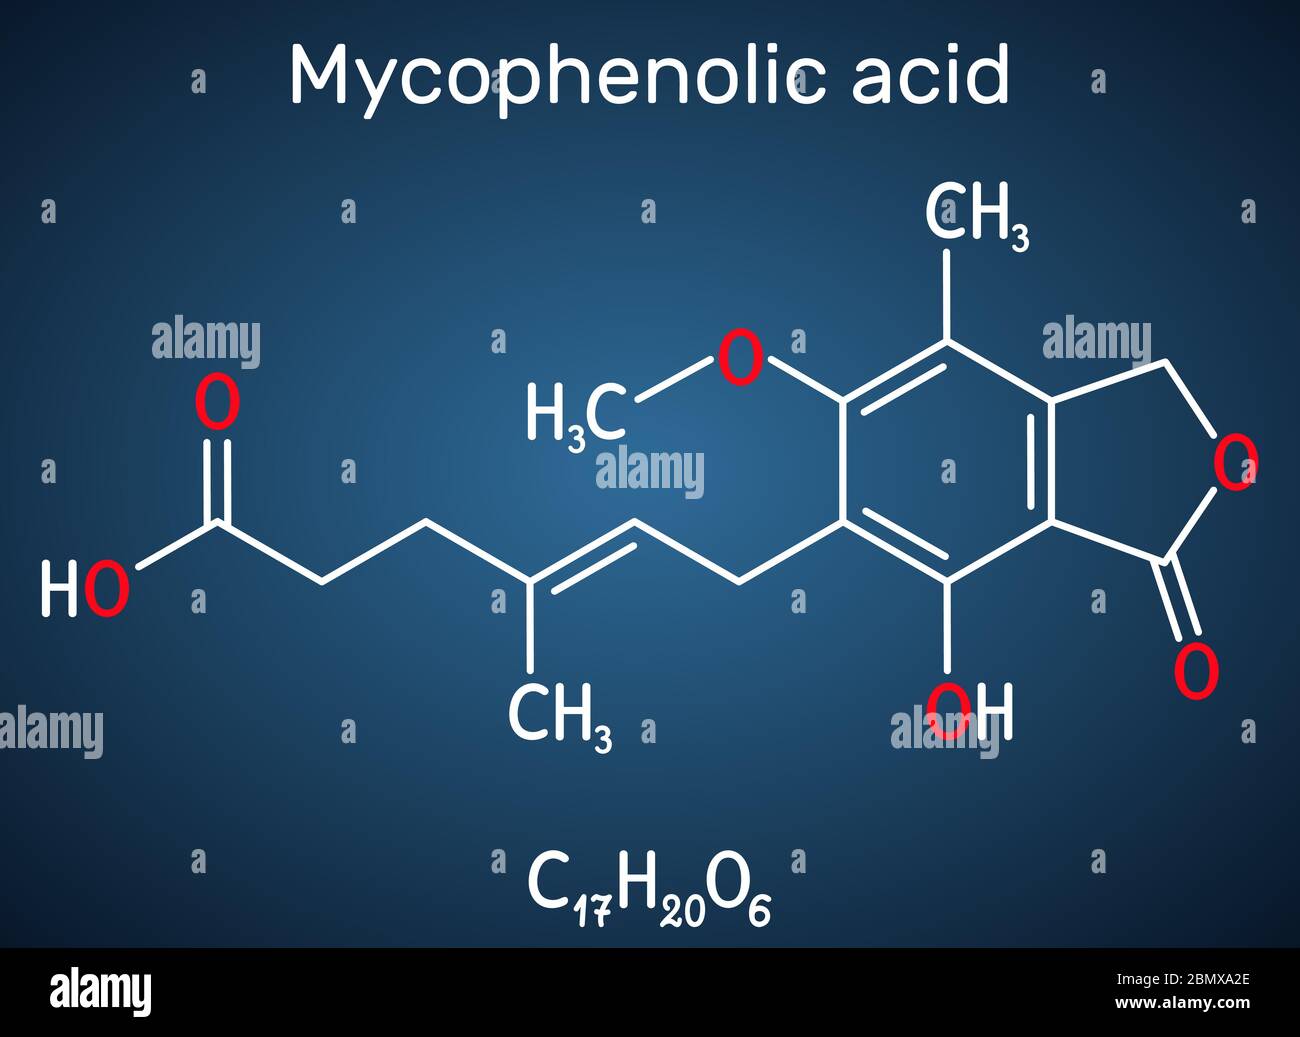 Mycophenolic acid, MPA, mycophenolate, C17H20O6 molecule. It is an immunosuppresant drug and potent anti-proliferative. Structural chemical formula on Stock Vector